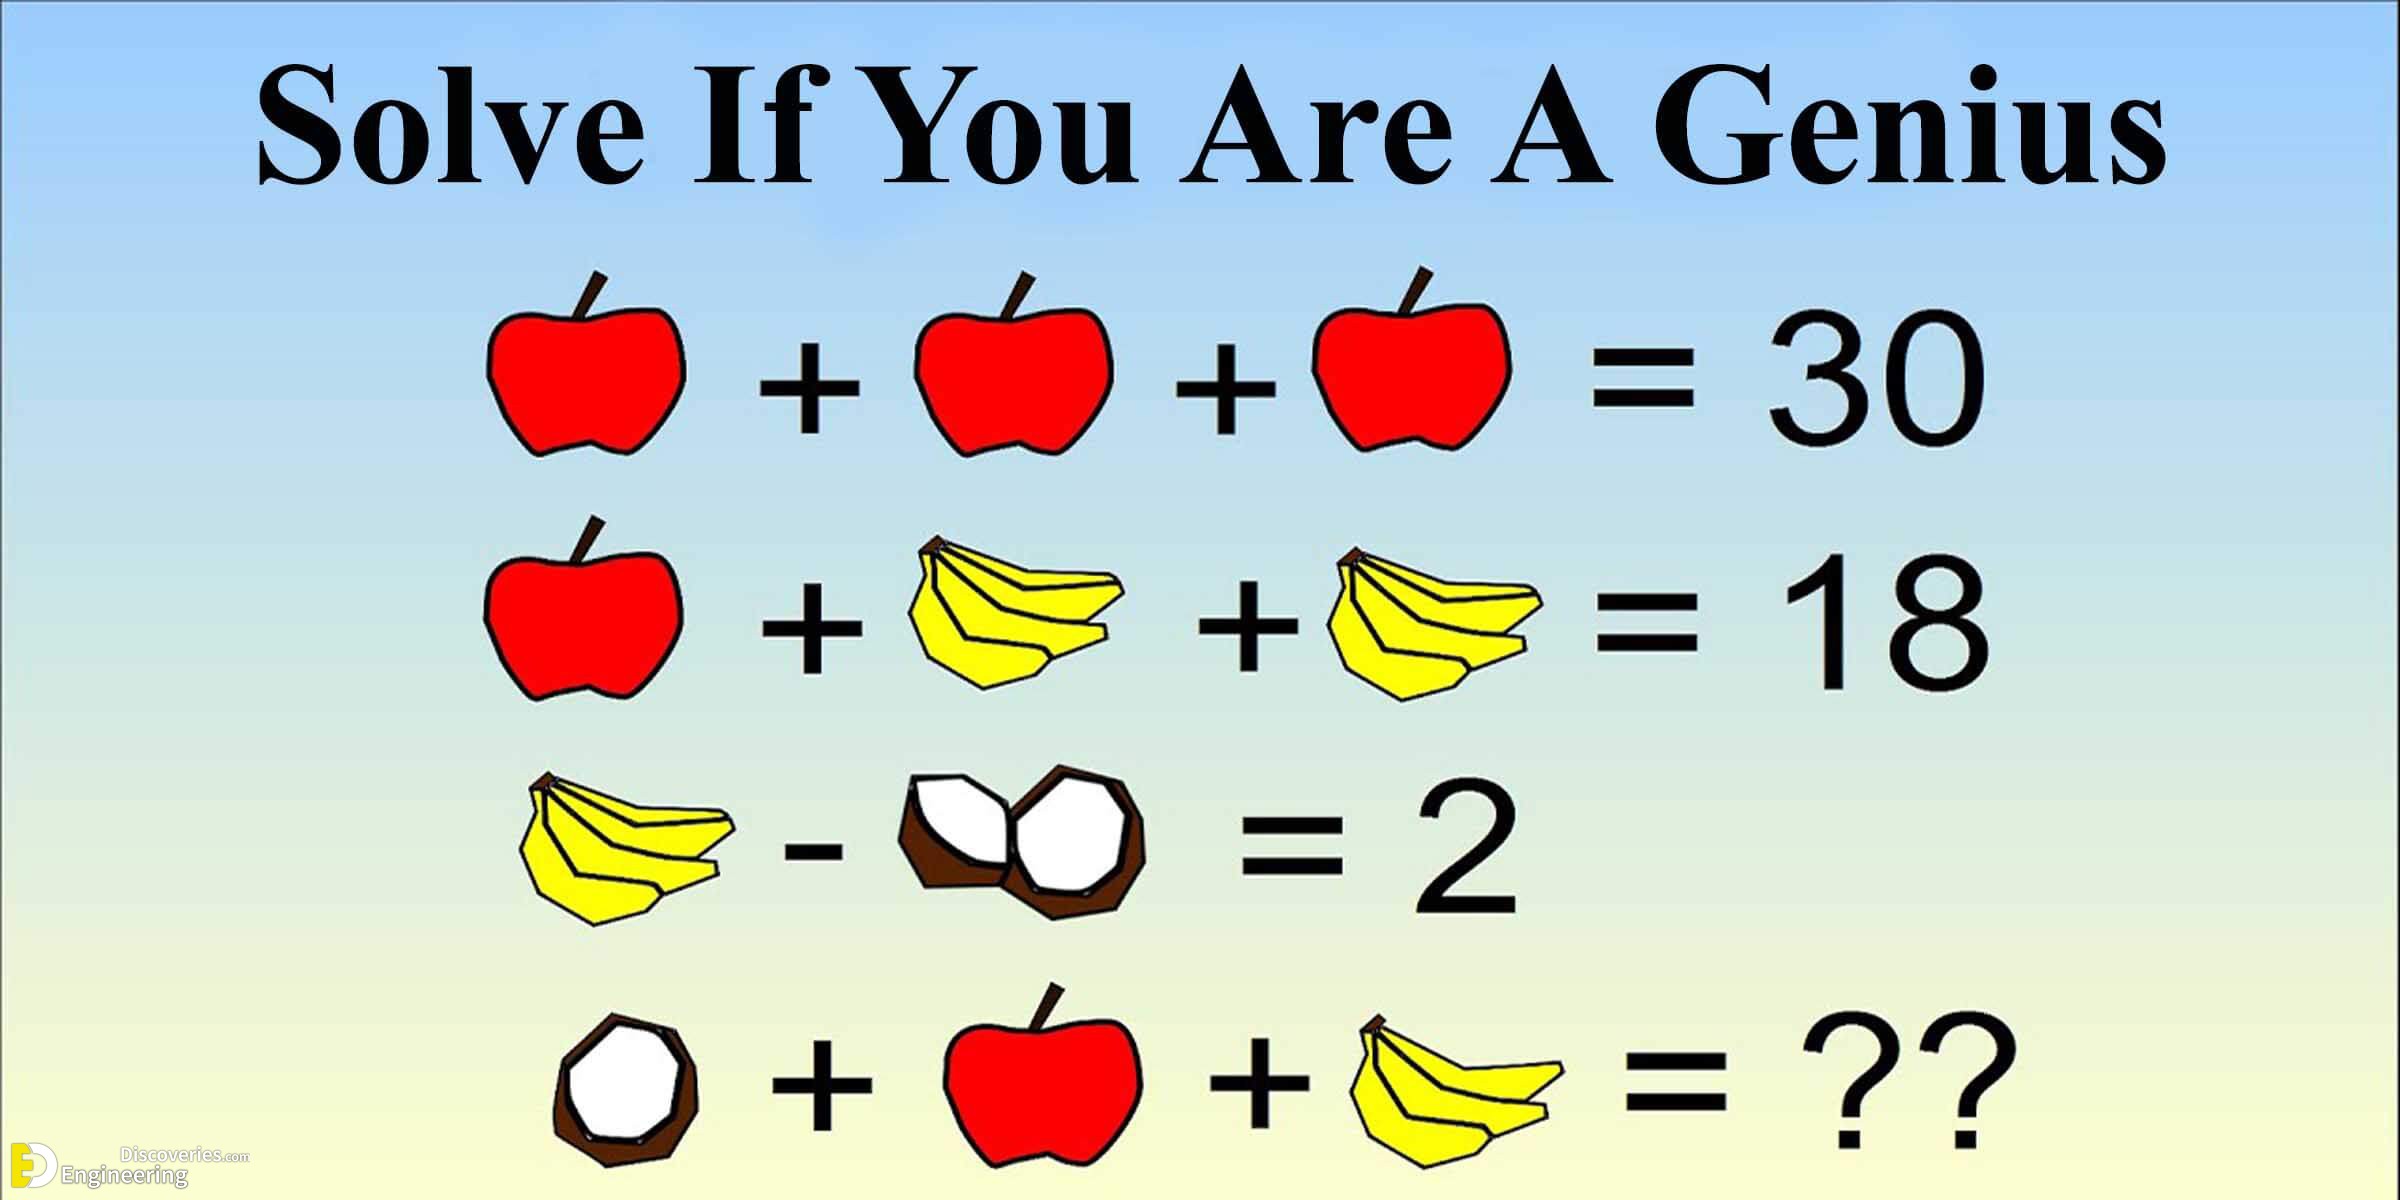 solve math problem by photo